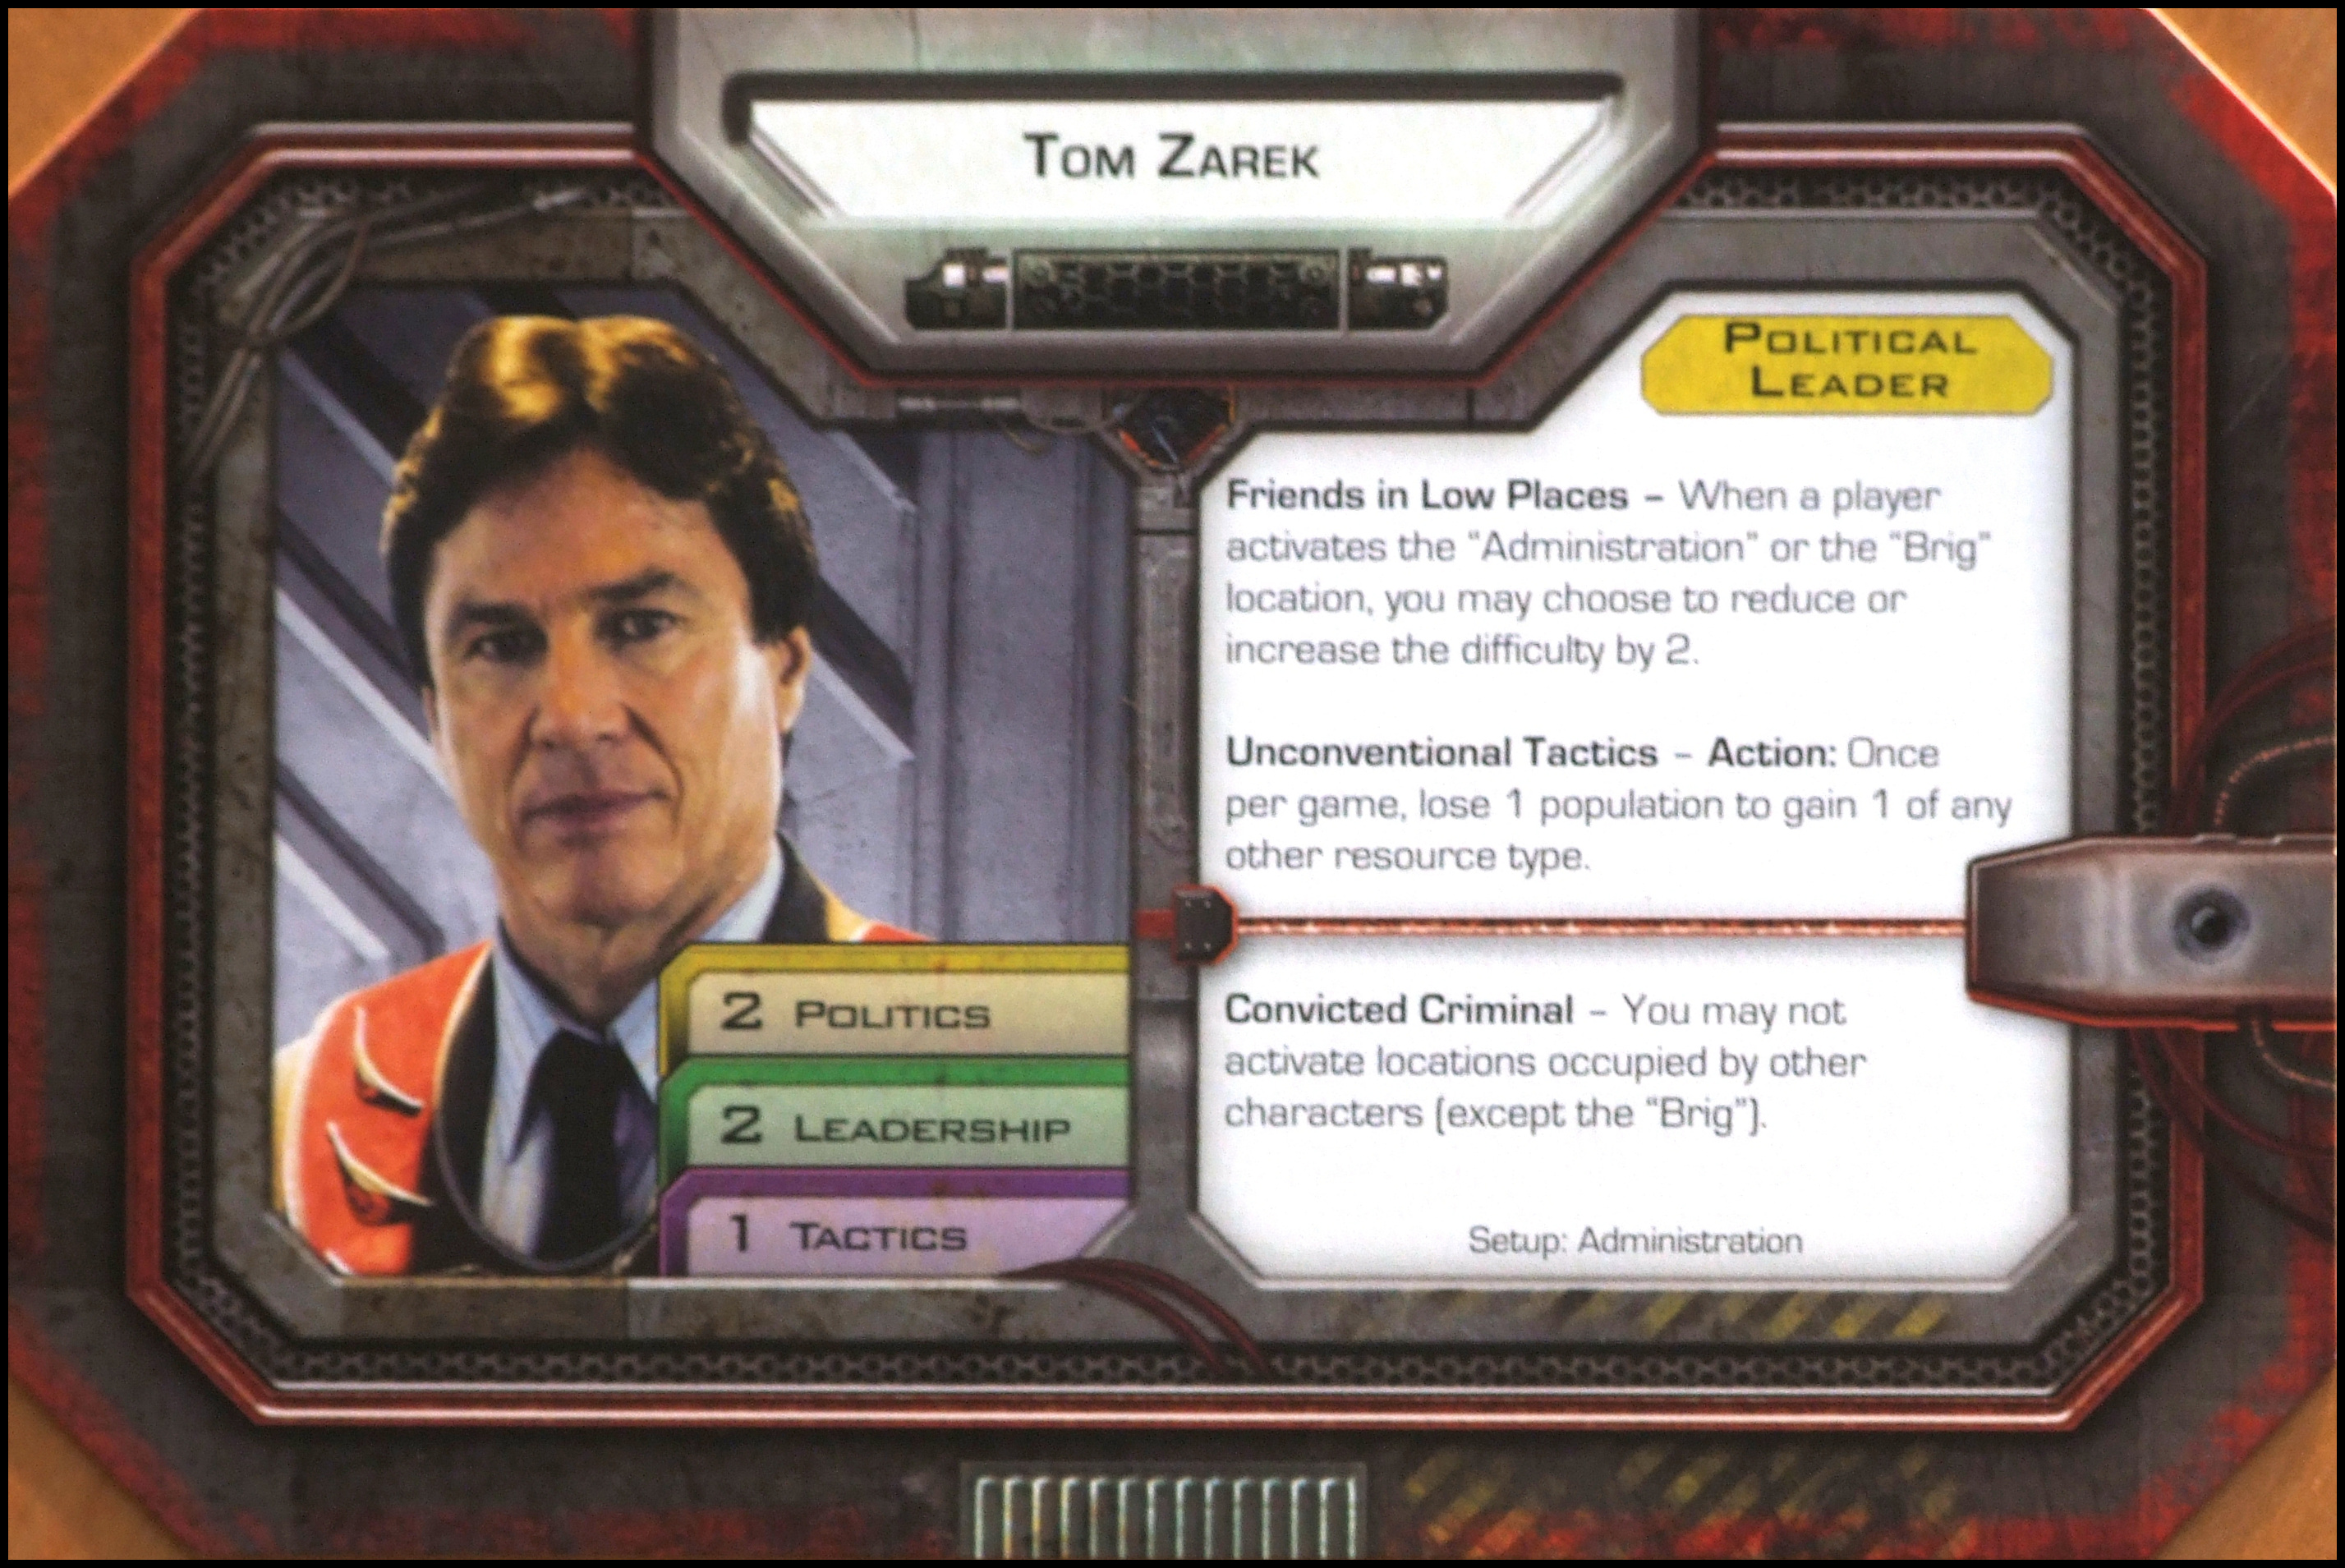 Battlestar Galactica: The Board Game - Tom Zarek Card